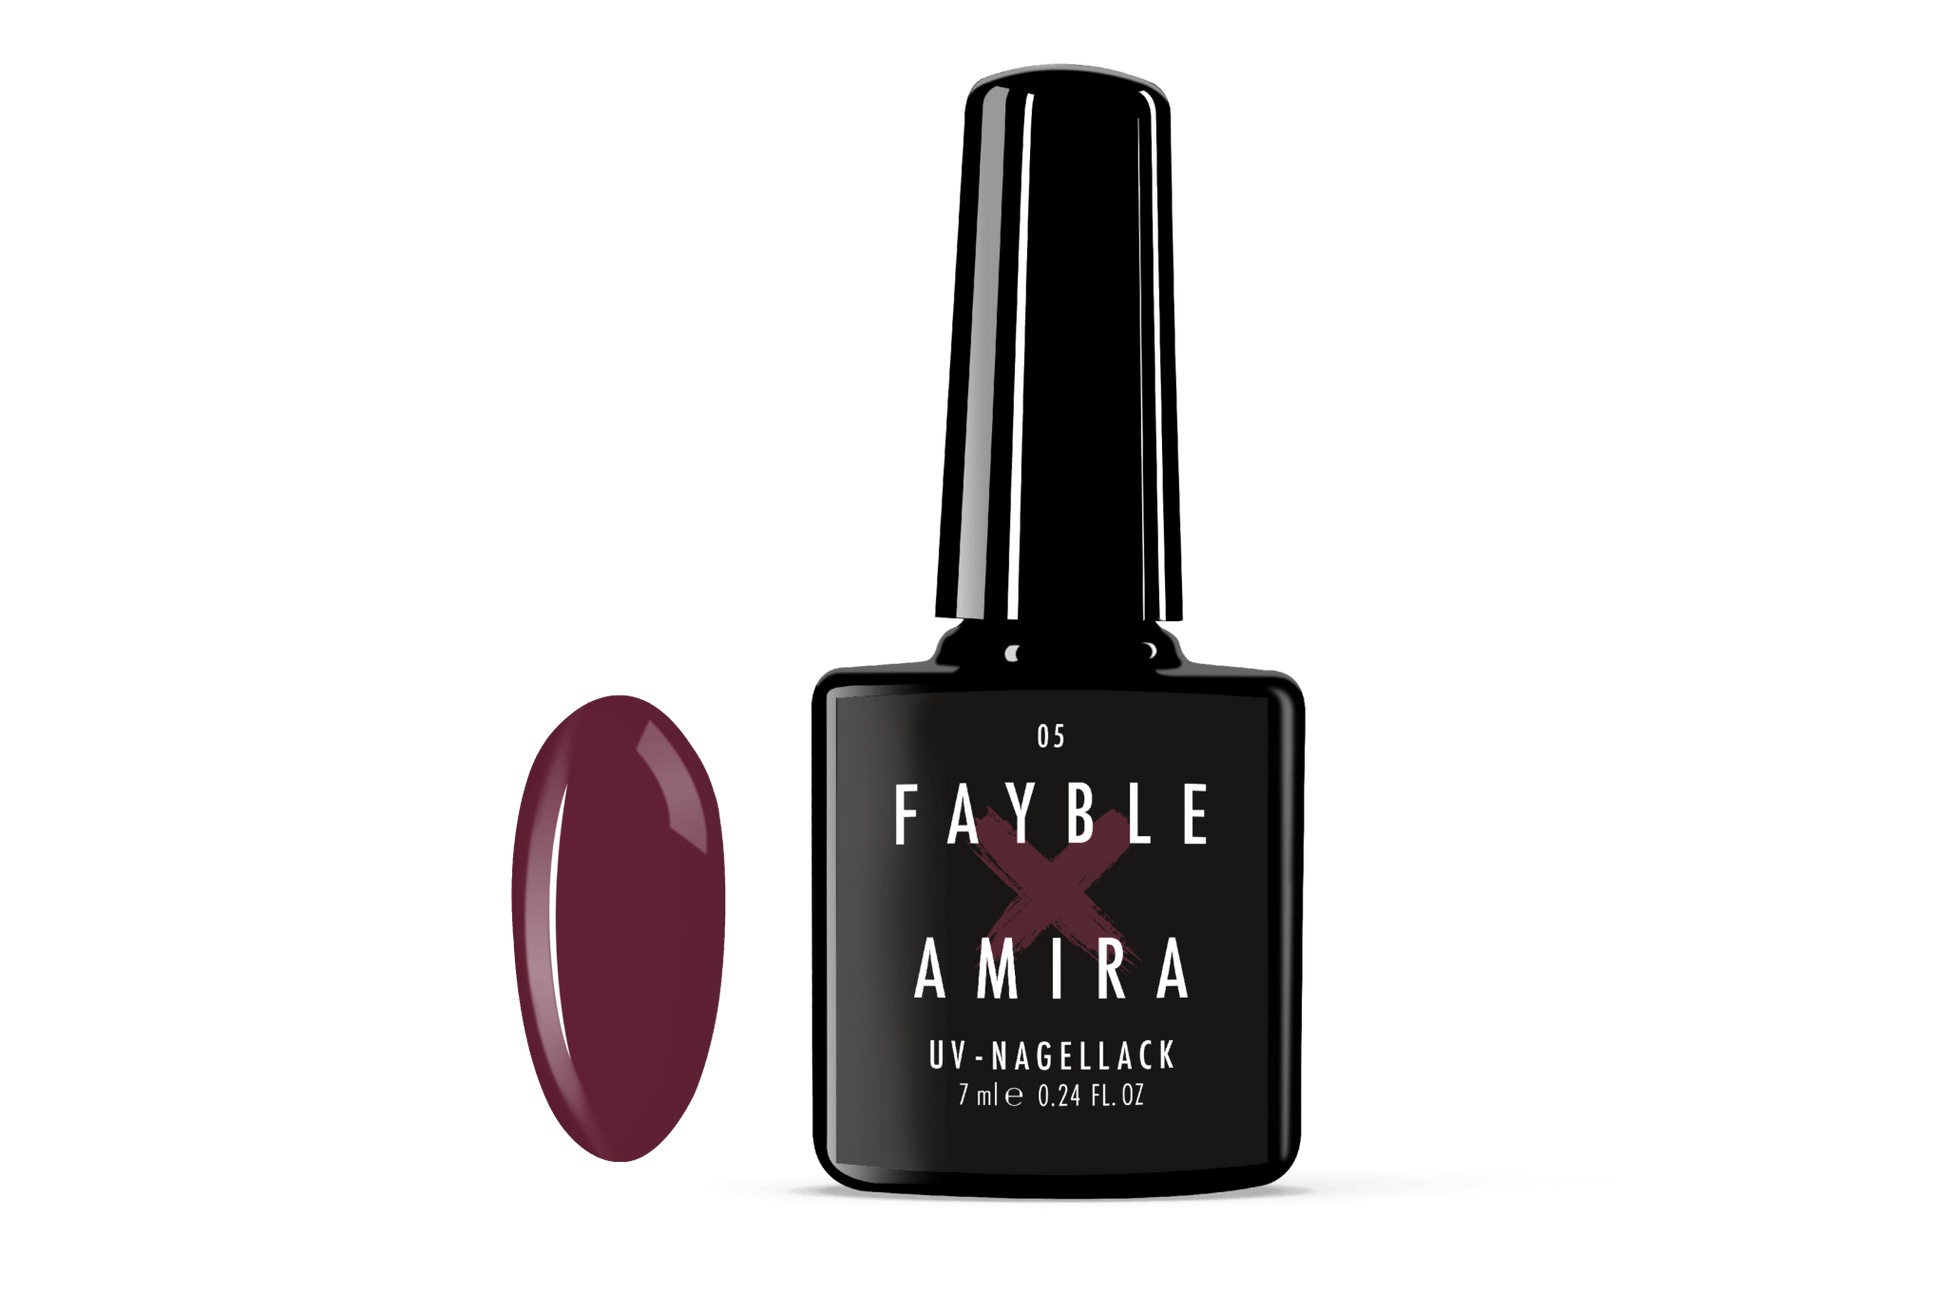 FAYBLE × AMIRA | UV-Nagellack 05 - FAYBLE